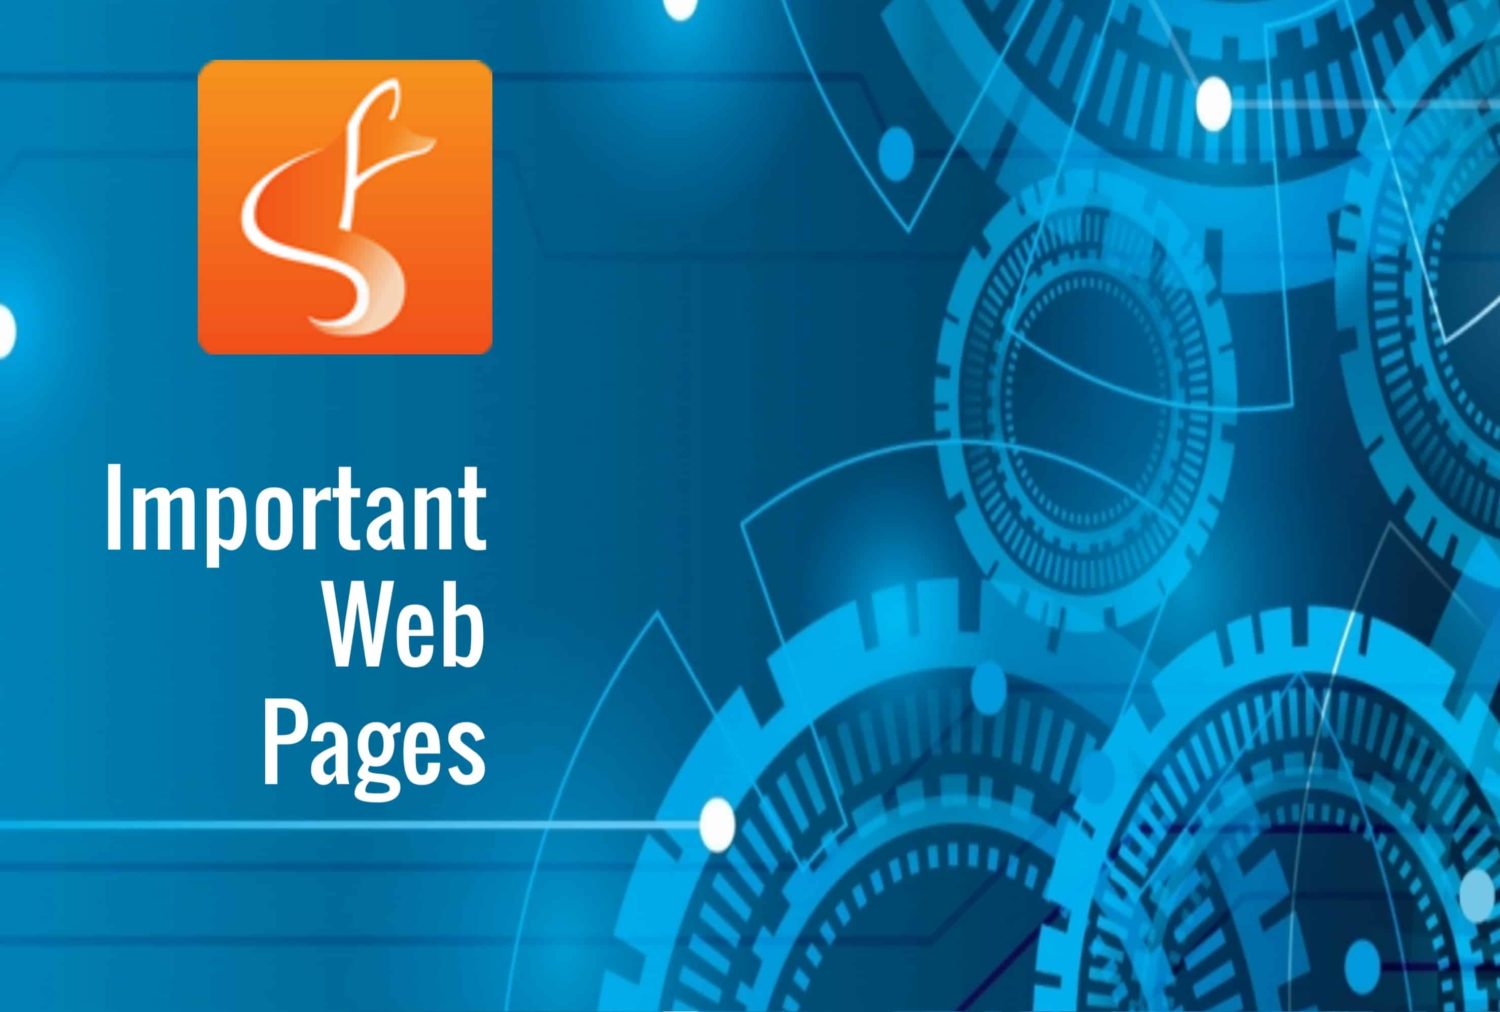 web design, website design london ontario, important web design pages - SlyFox Web Design and Marketing